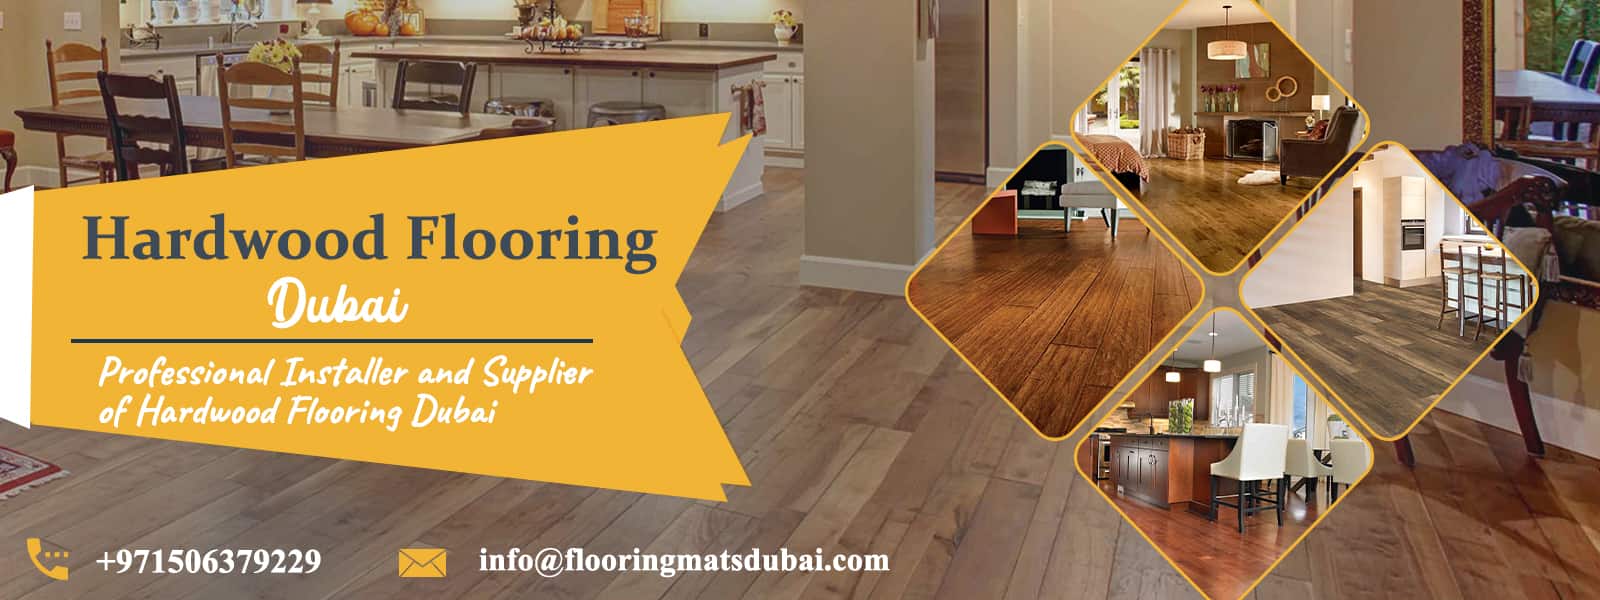 Hardwood-flooring-banner-1